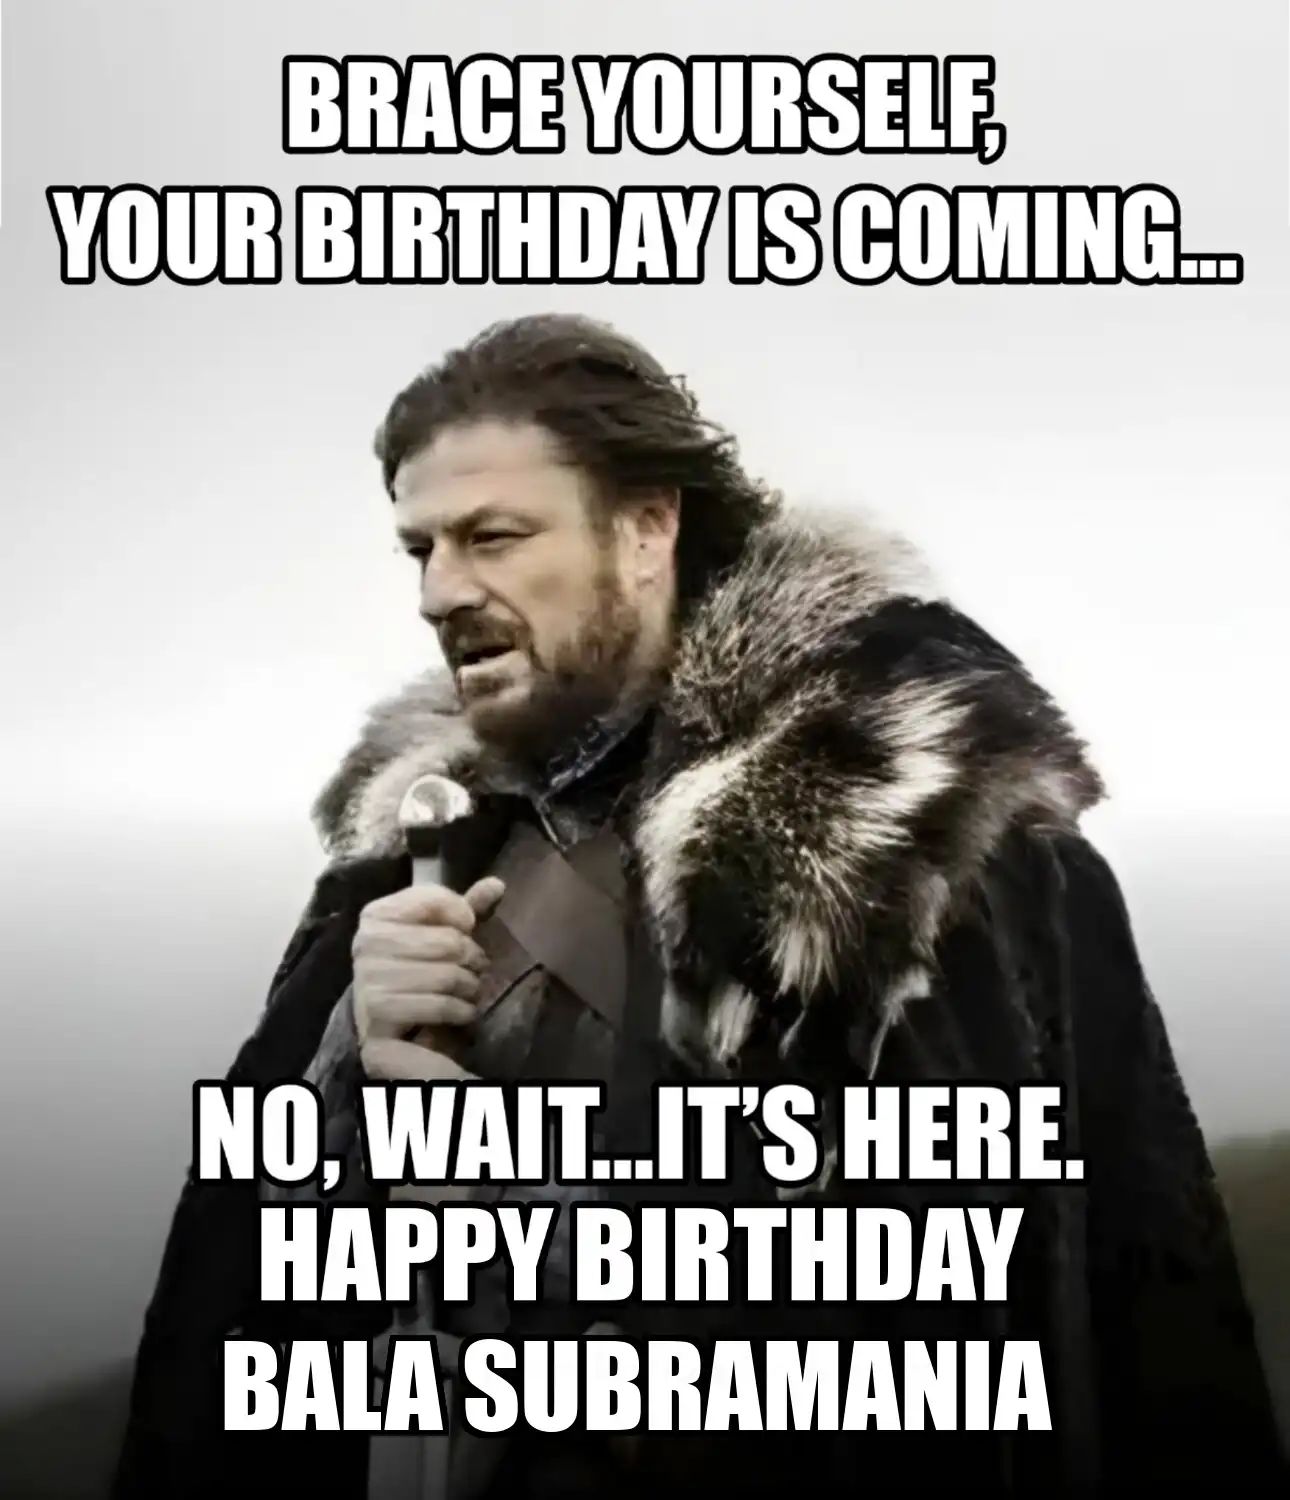 Happy Birthday Bala Subramania Brace Yourself Your Birthday Is Coming Meme